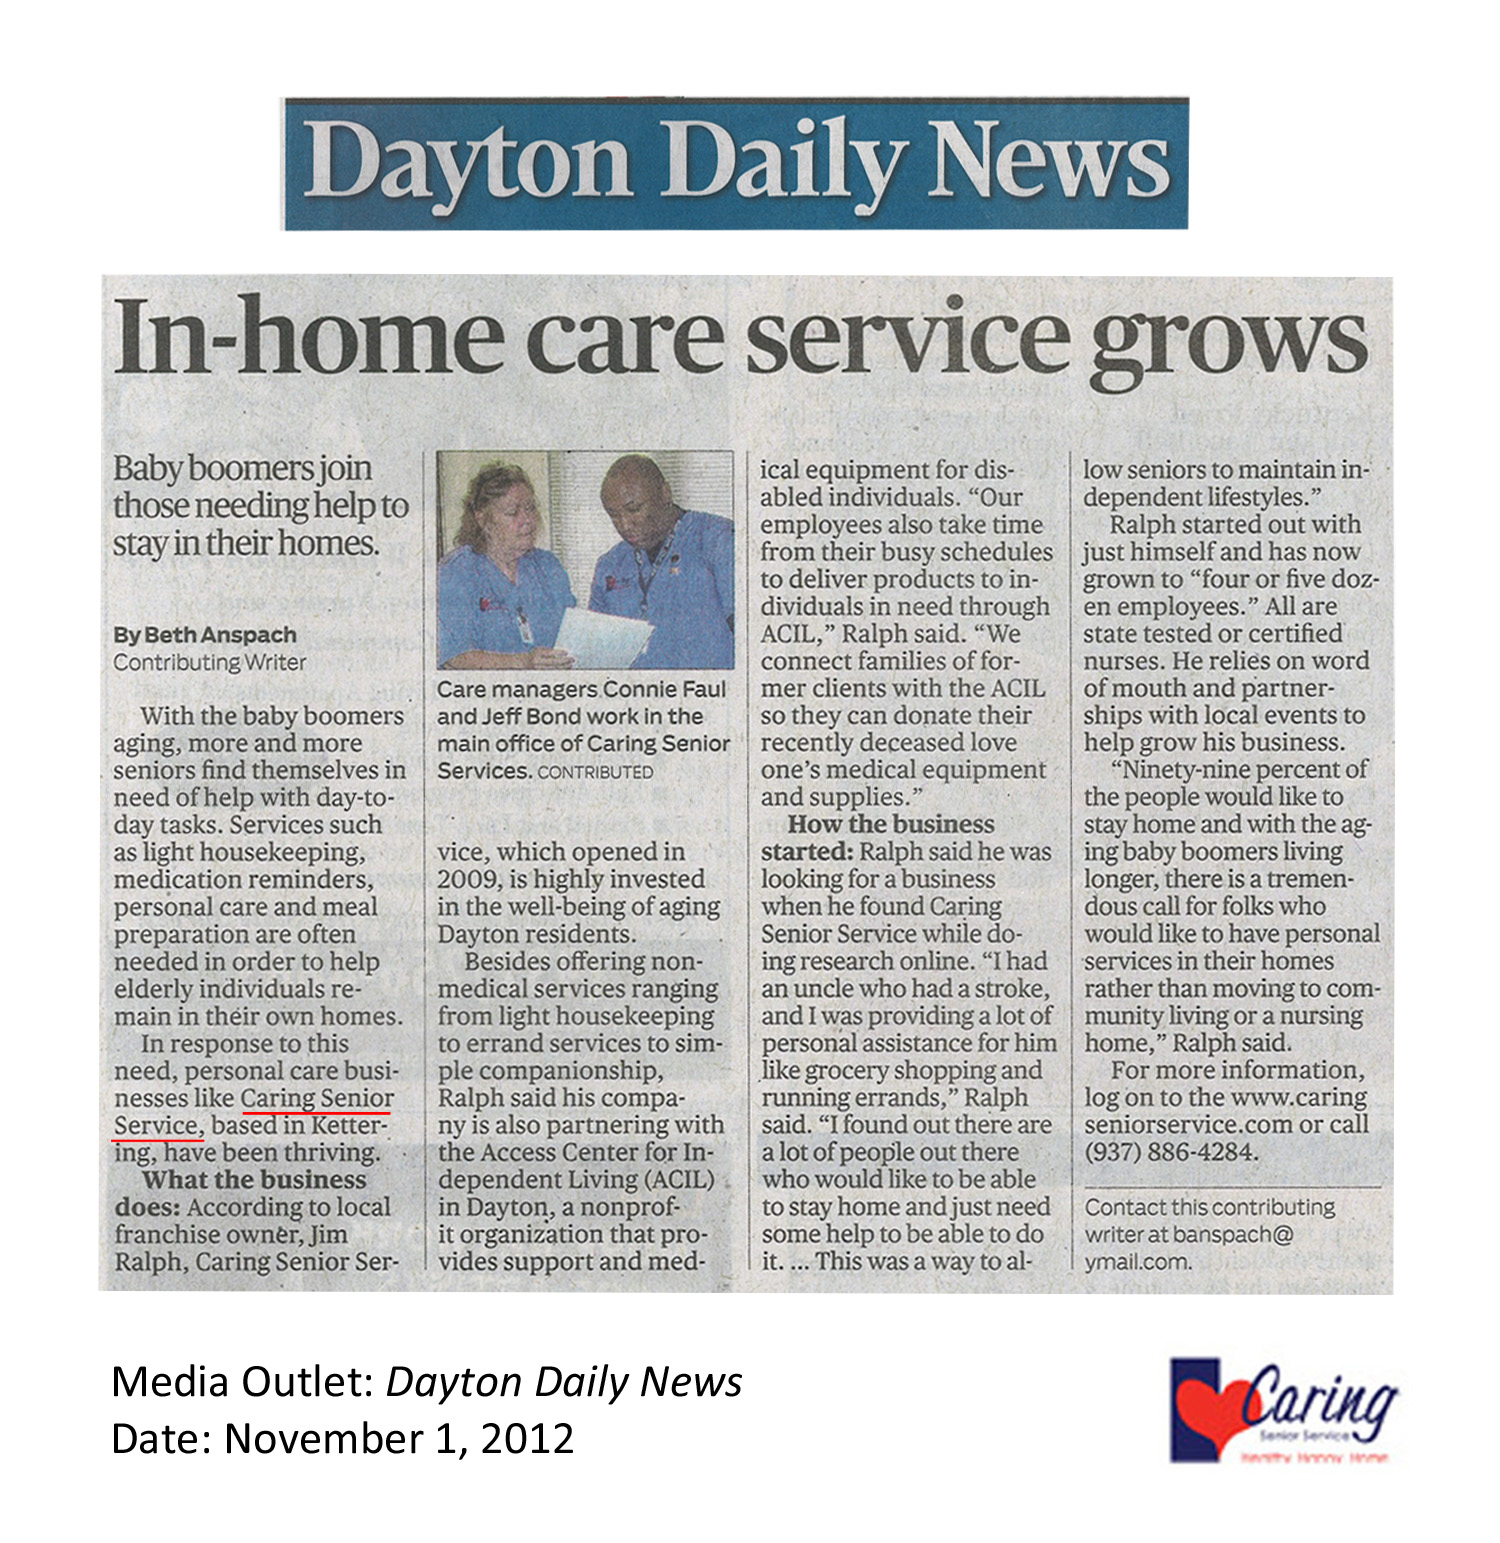 dayton daily news logo